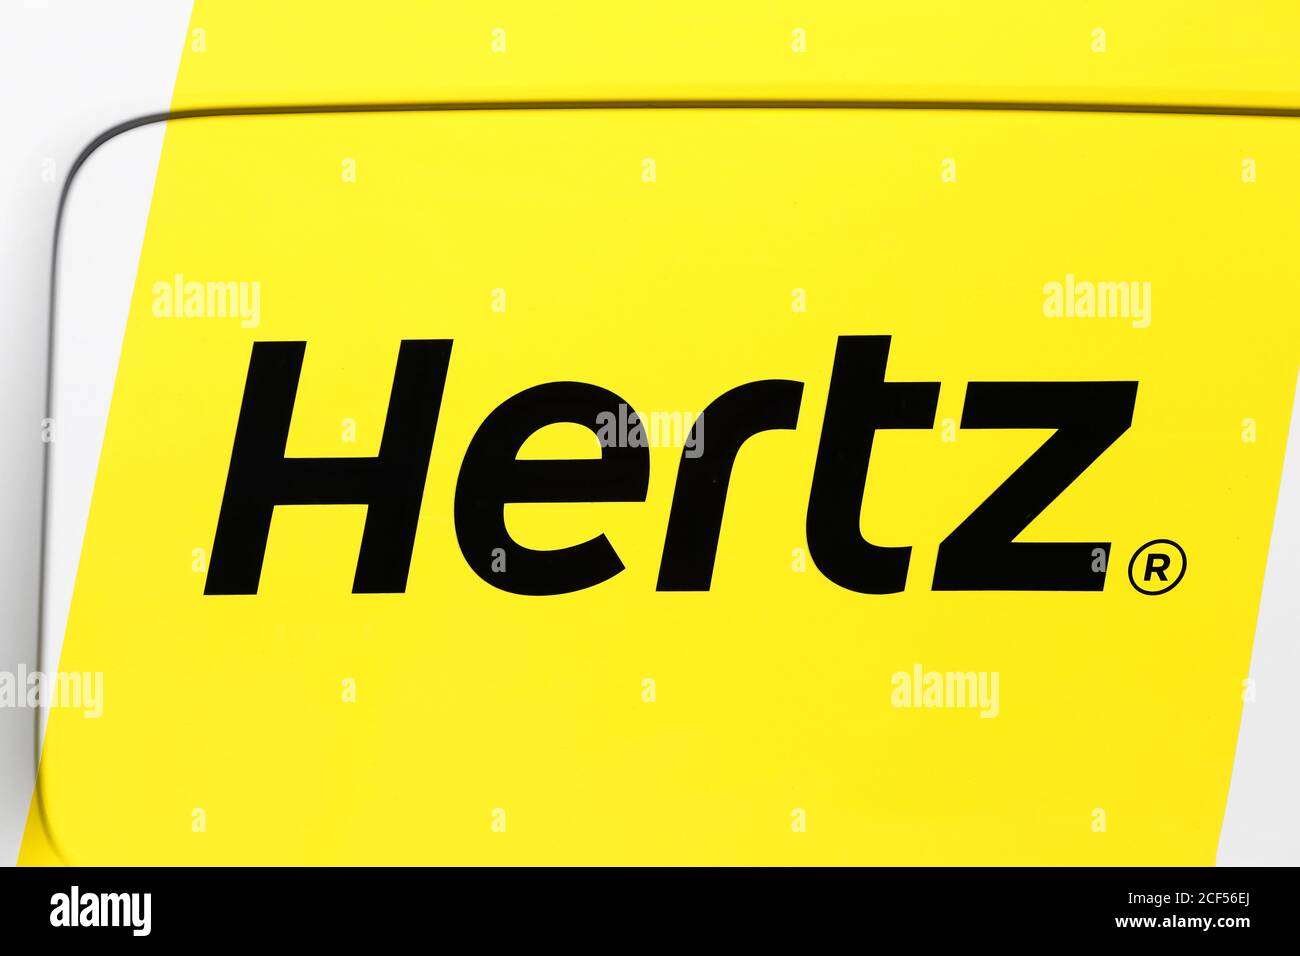 Villefranche sur Saone, France - May 17, 2020: Hertz logo on a car. Hertz is an American car rental company Stock Photo